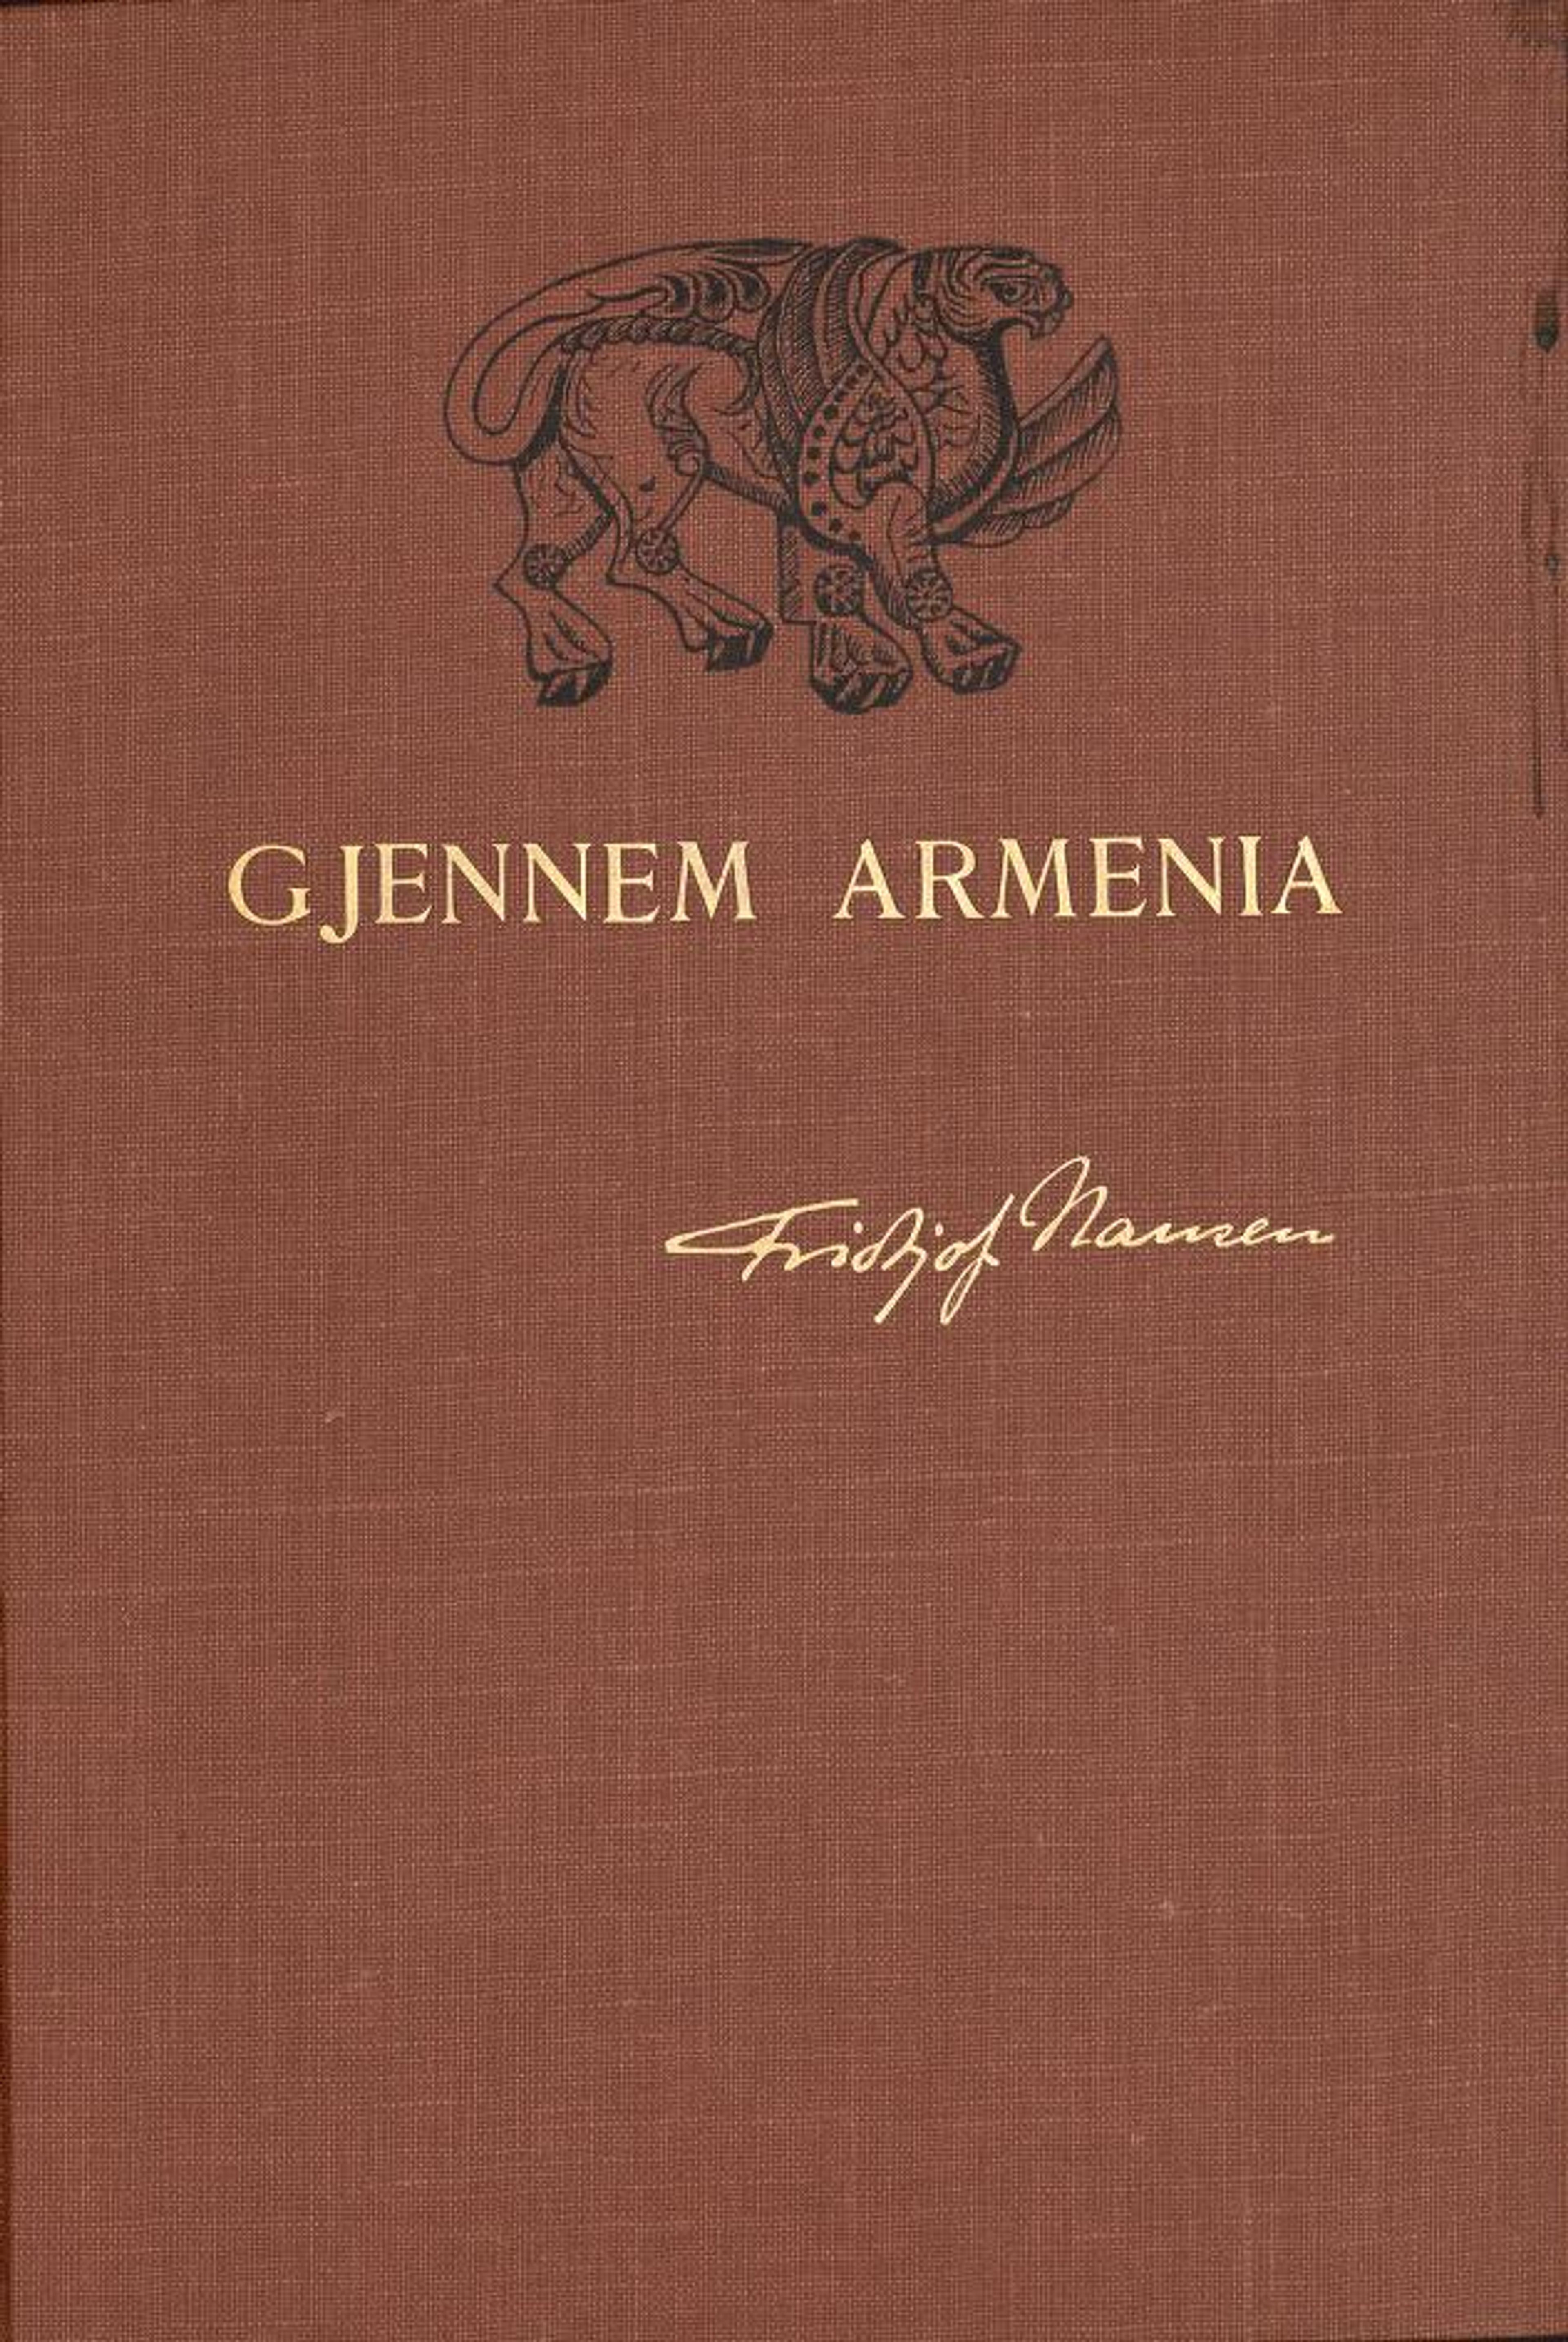 Gjennem Armenia